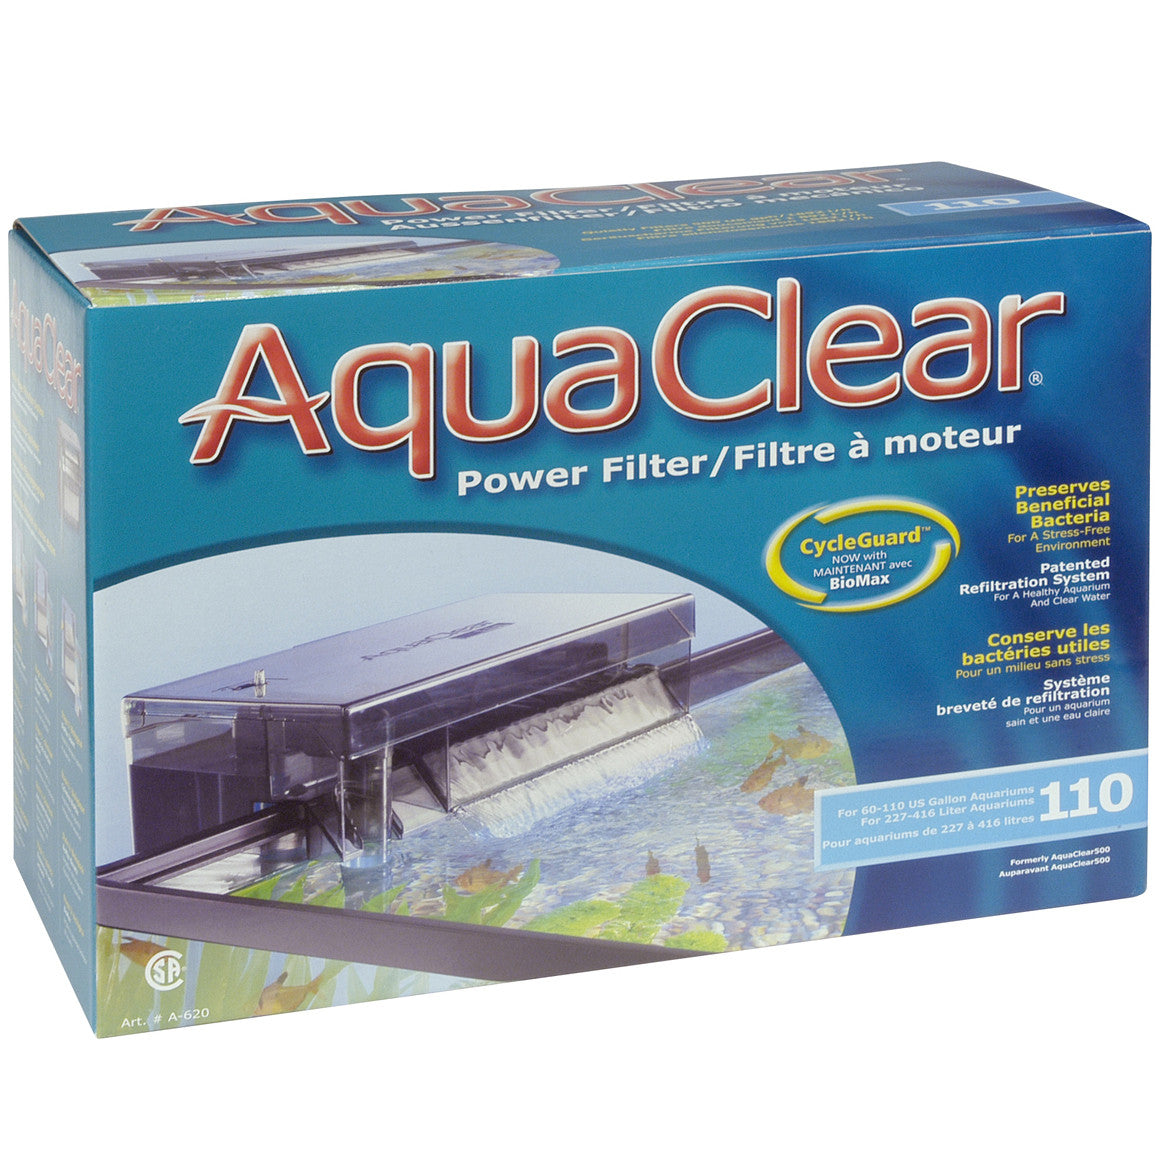 AquaClear 110 Power Filter, cETLus Listed (Inc. A622, A623 & A1374) 015561106207